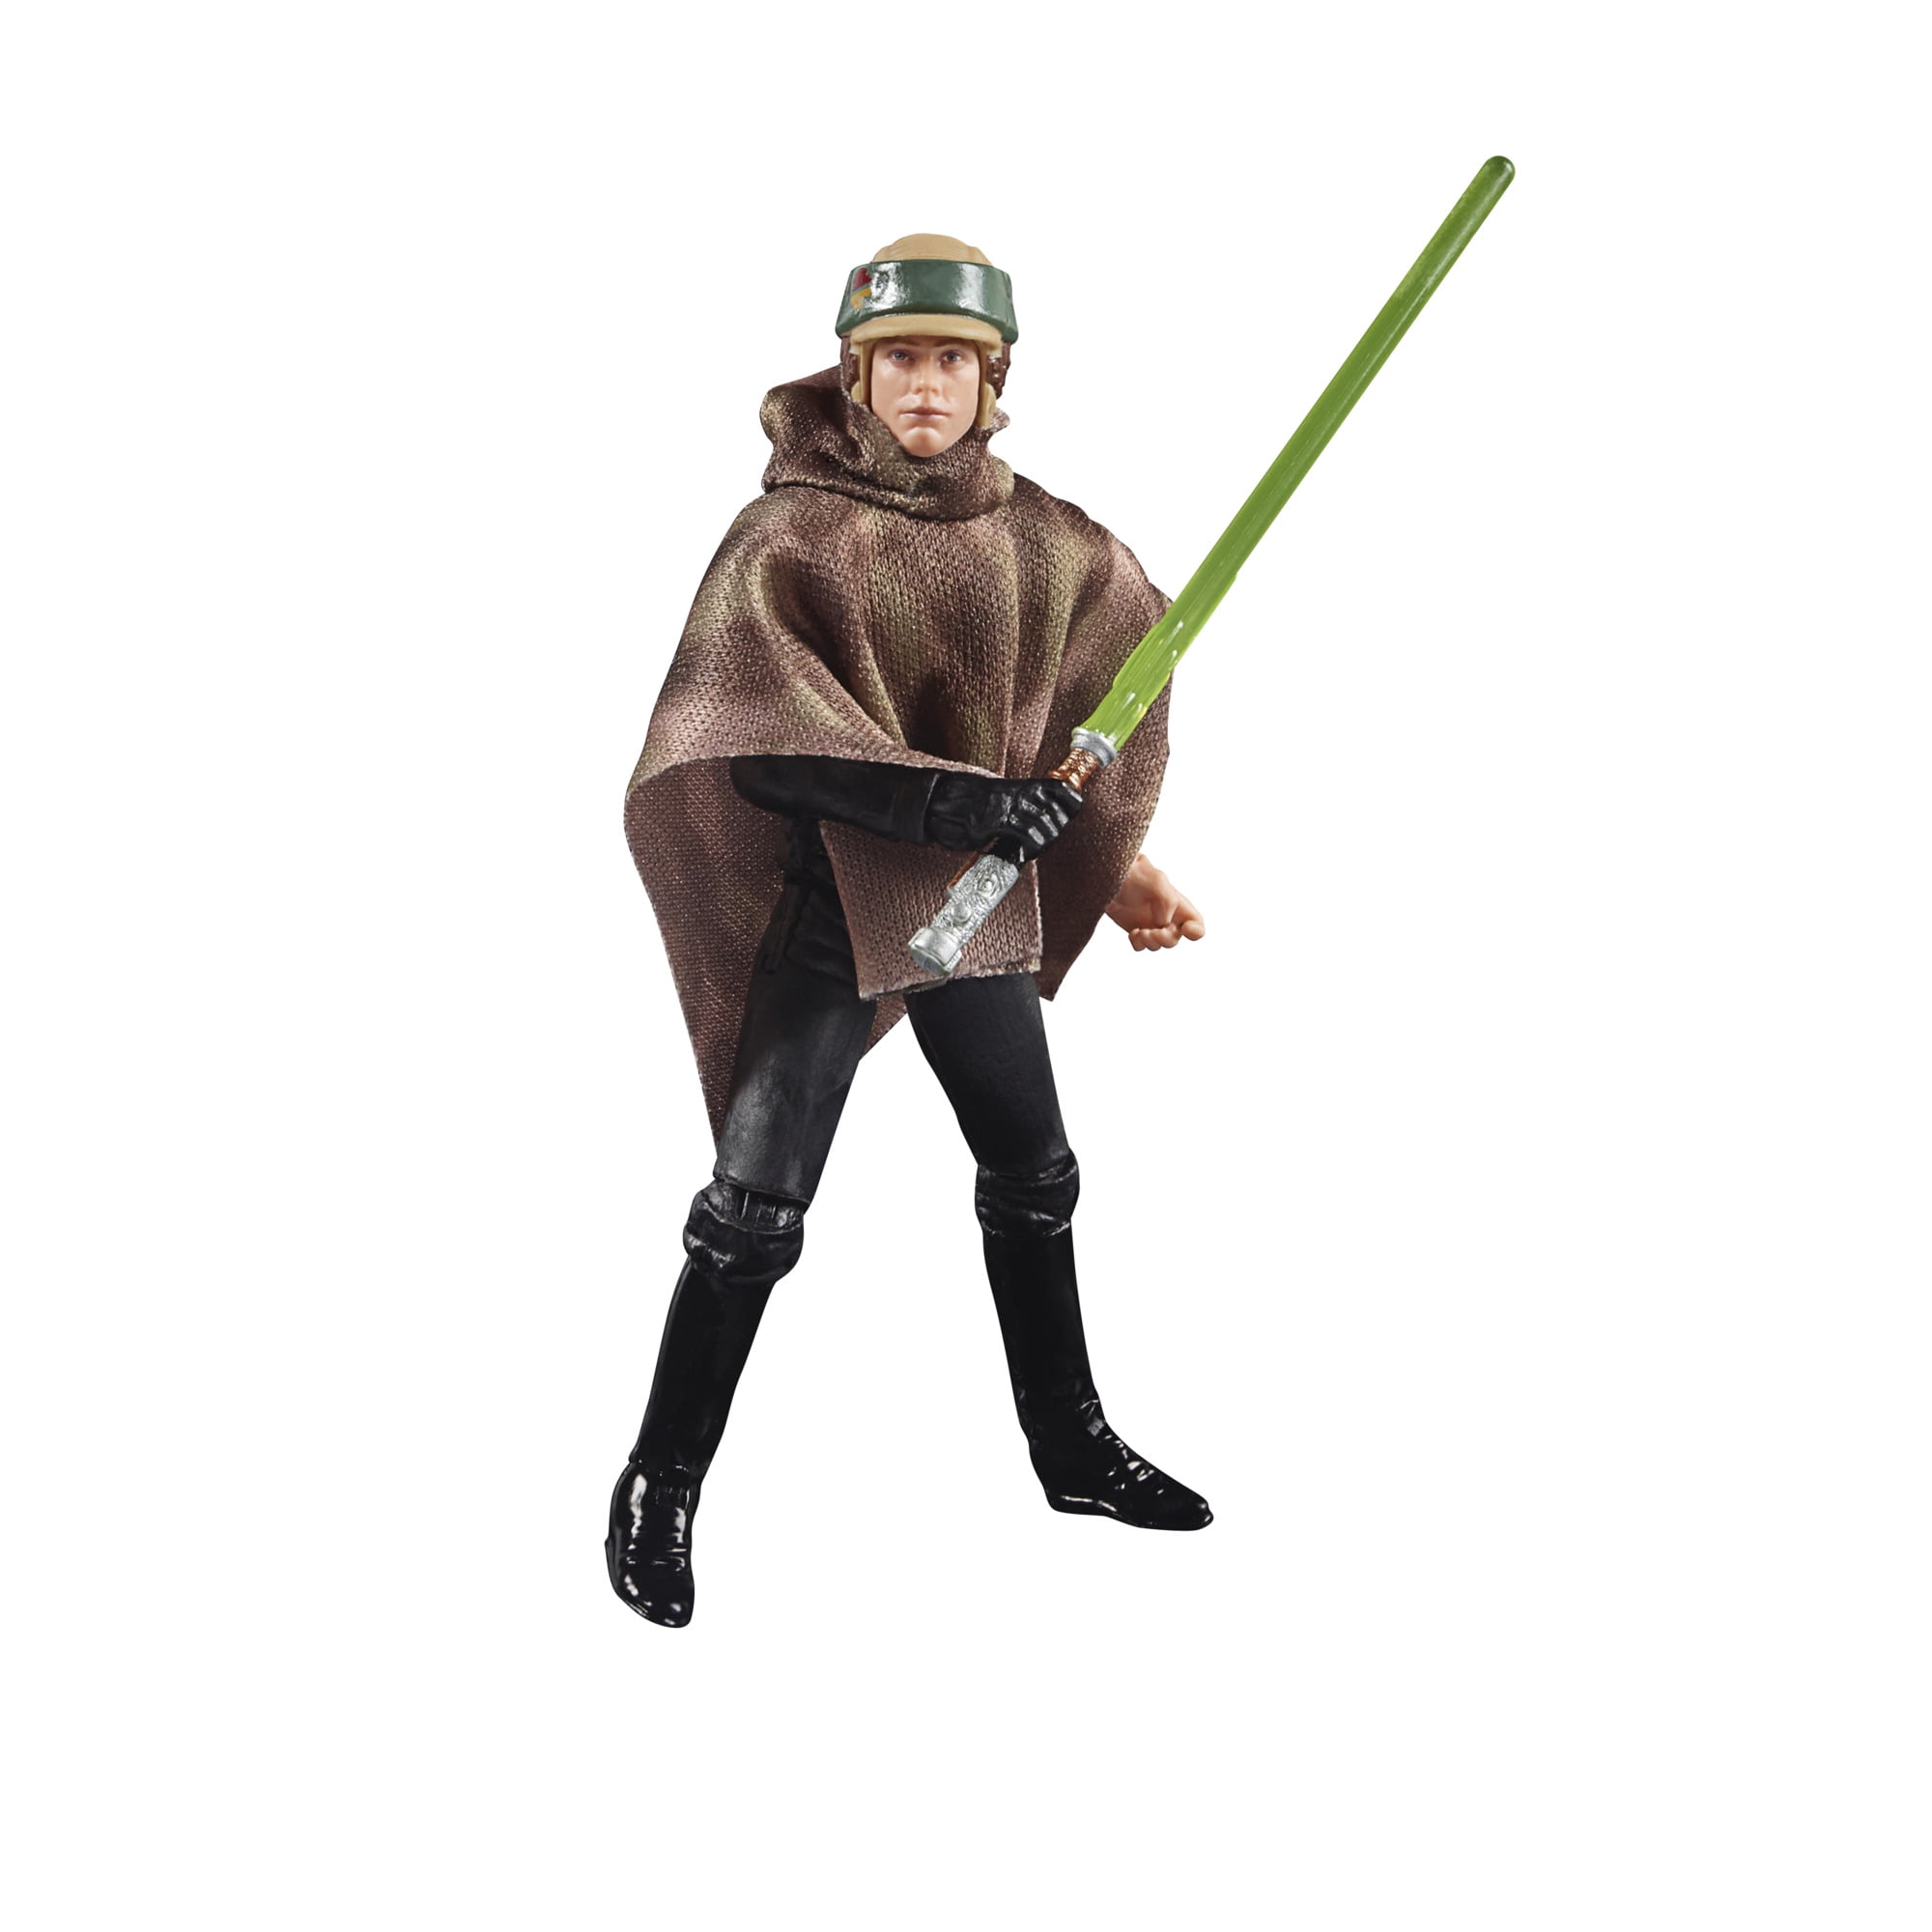 Hasbro Star Wars Kenner Luke Skywalker Action Figure for sale online